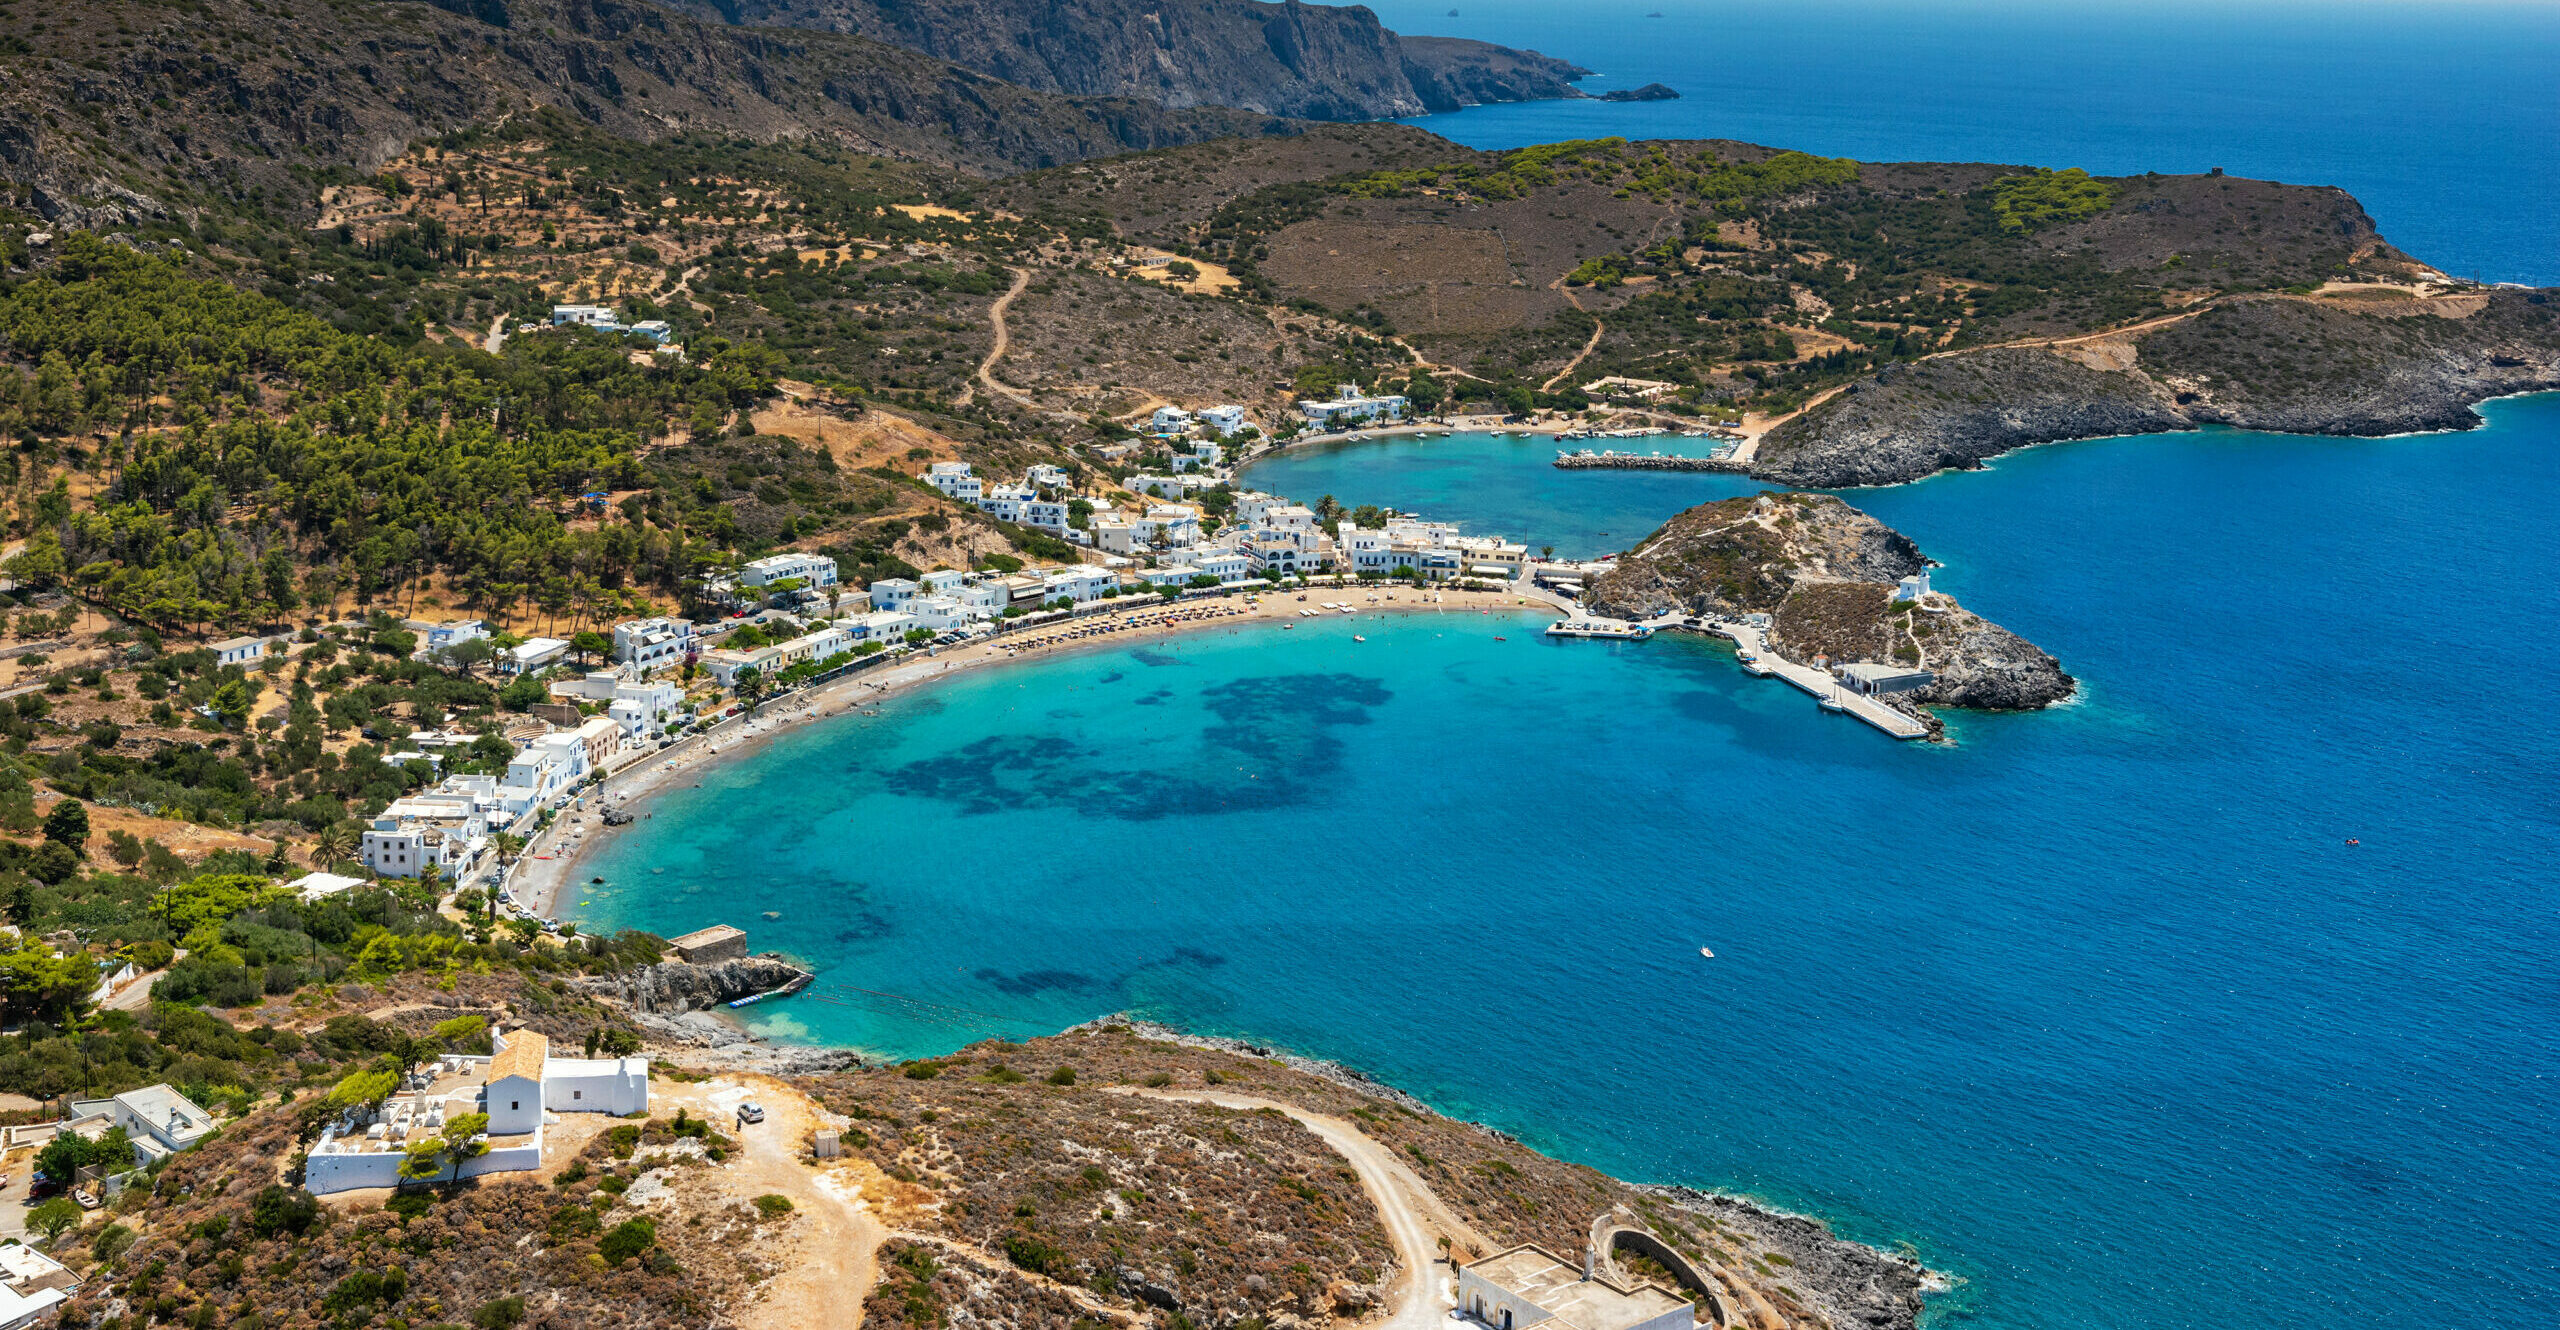 Kapsali: The beautiful beach “omega” in the Ionian Sea